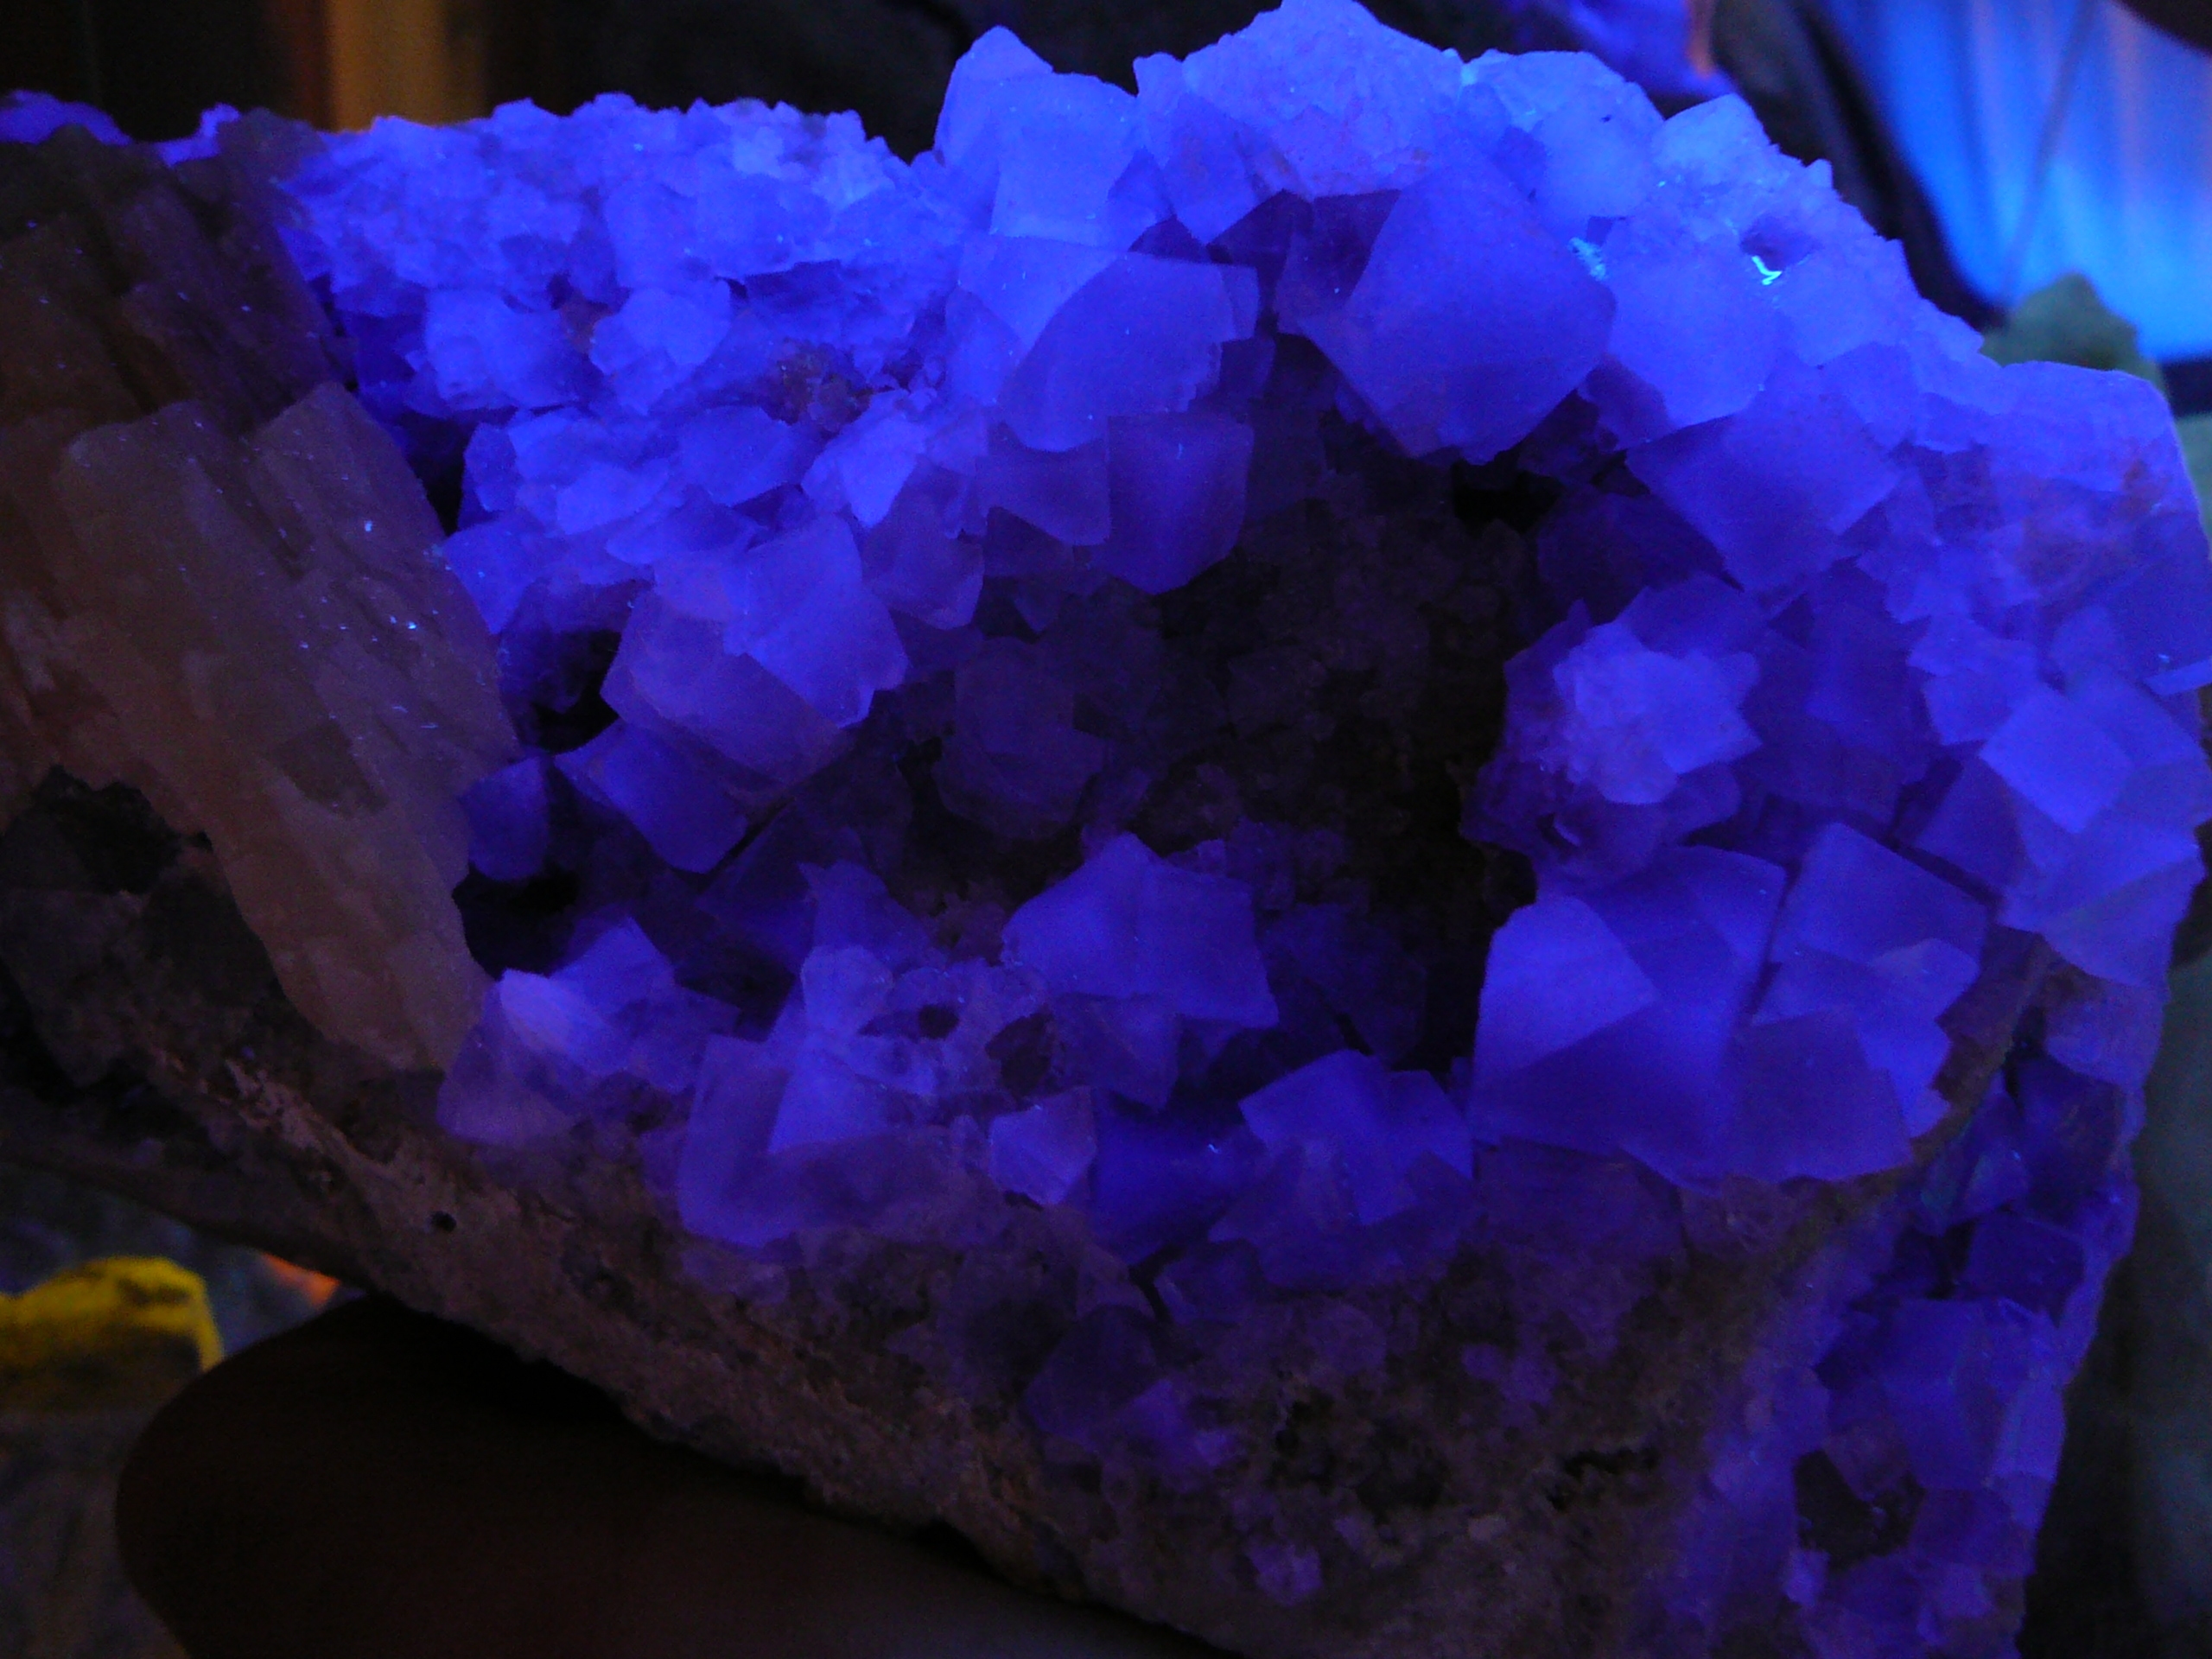 Fluorite (light blue) - Bingham.